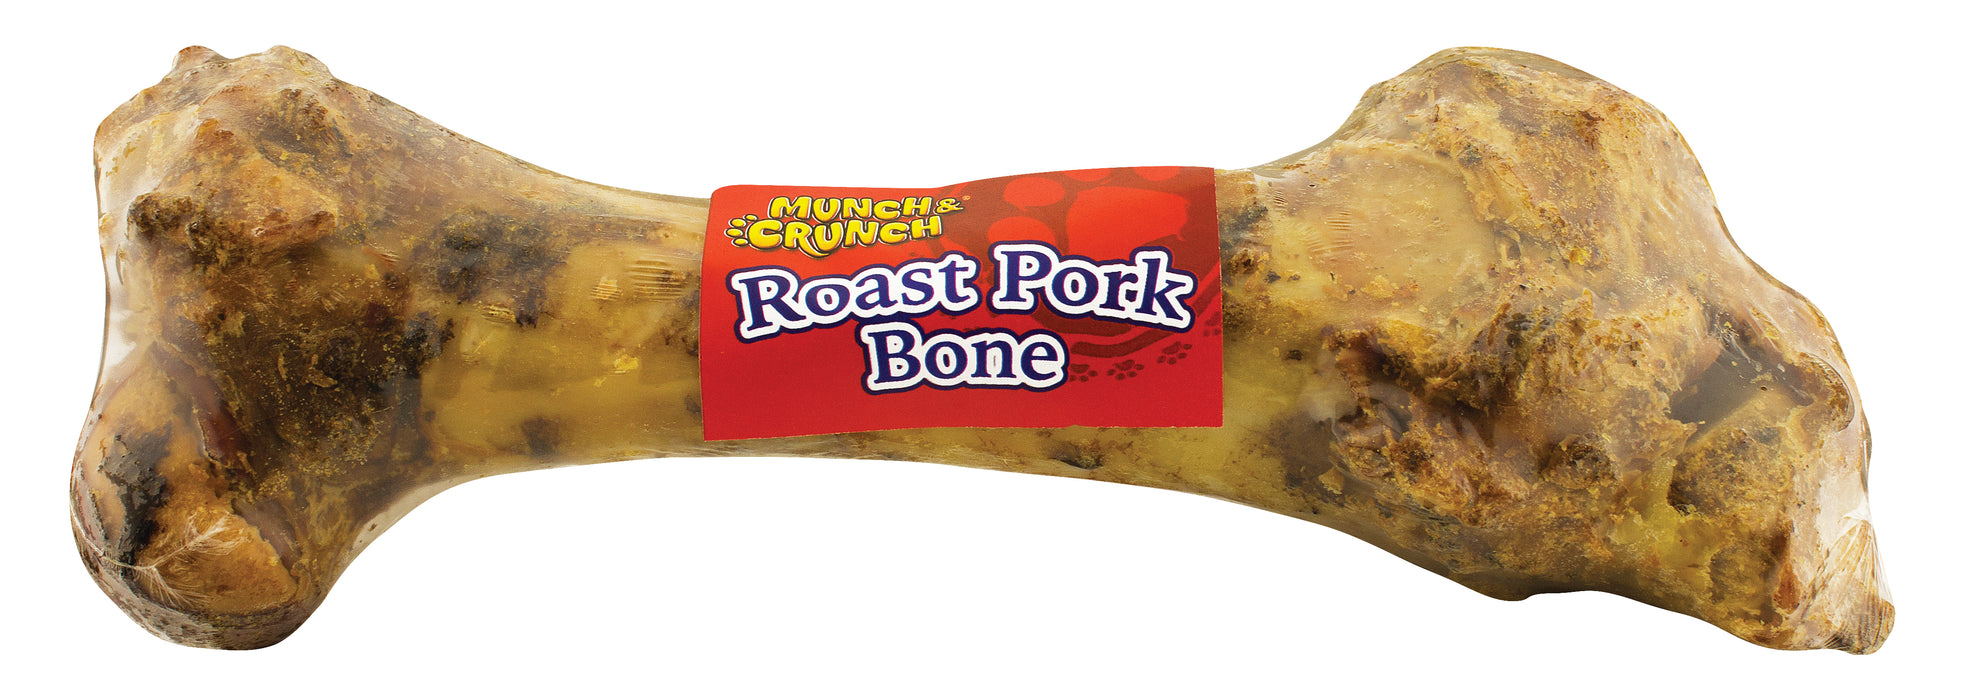 Roast Pork Bone